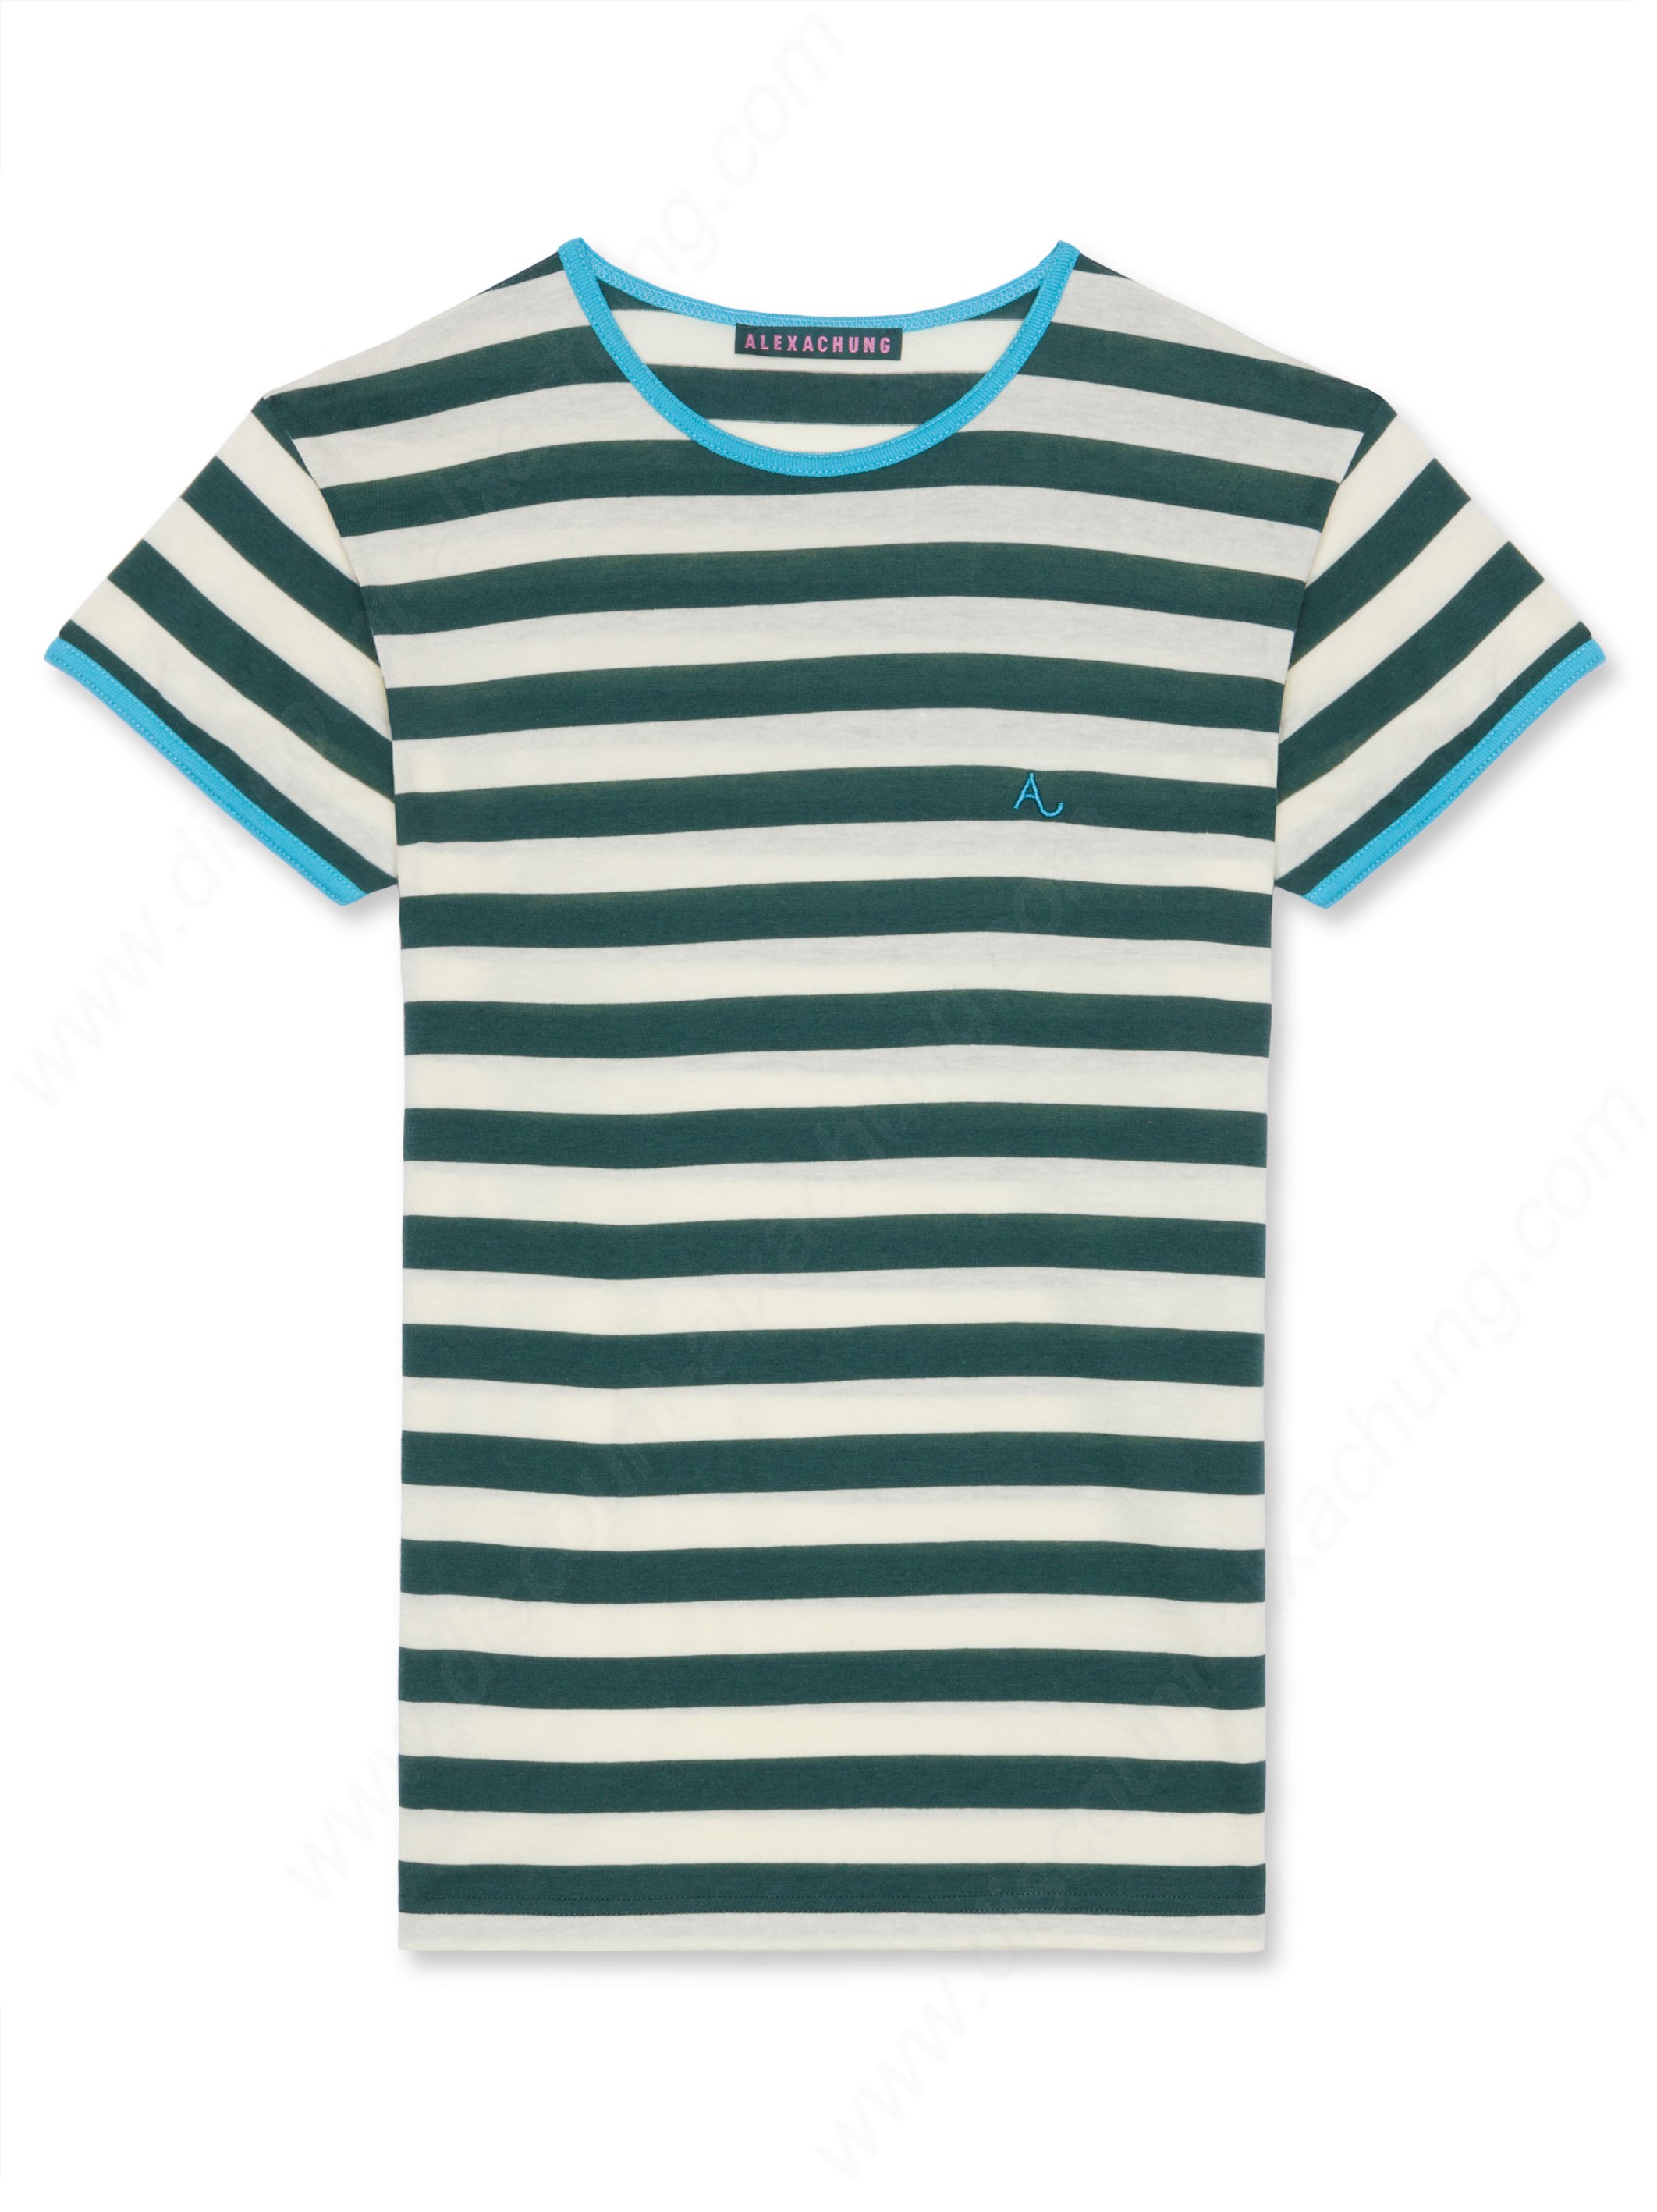 Alexachung Bottle Green Contrast Stripy Short Sleeve T-Shirts - Alexachung Bottle Green Contrast Stripy Short Sleeve T-Shirts